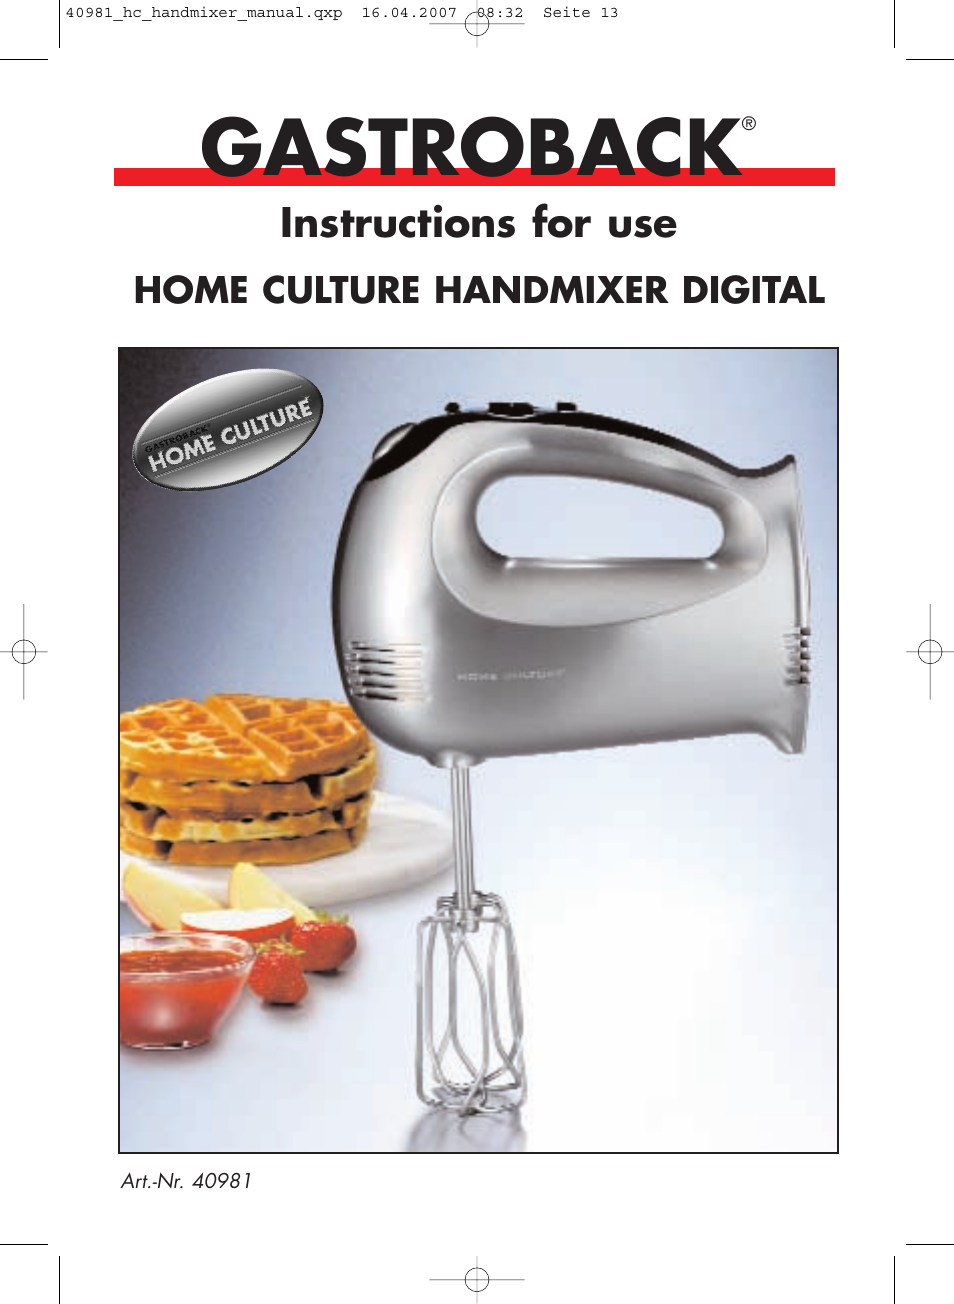 Gastroback 40981 Hand Mixer Digital Home Culture User Manual | 12 pages